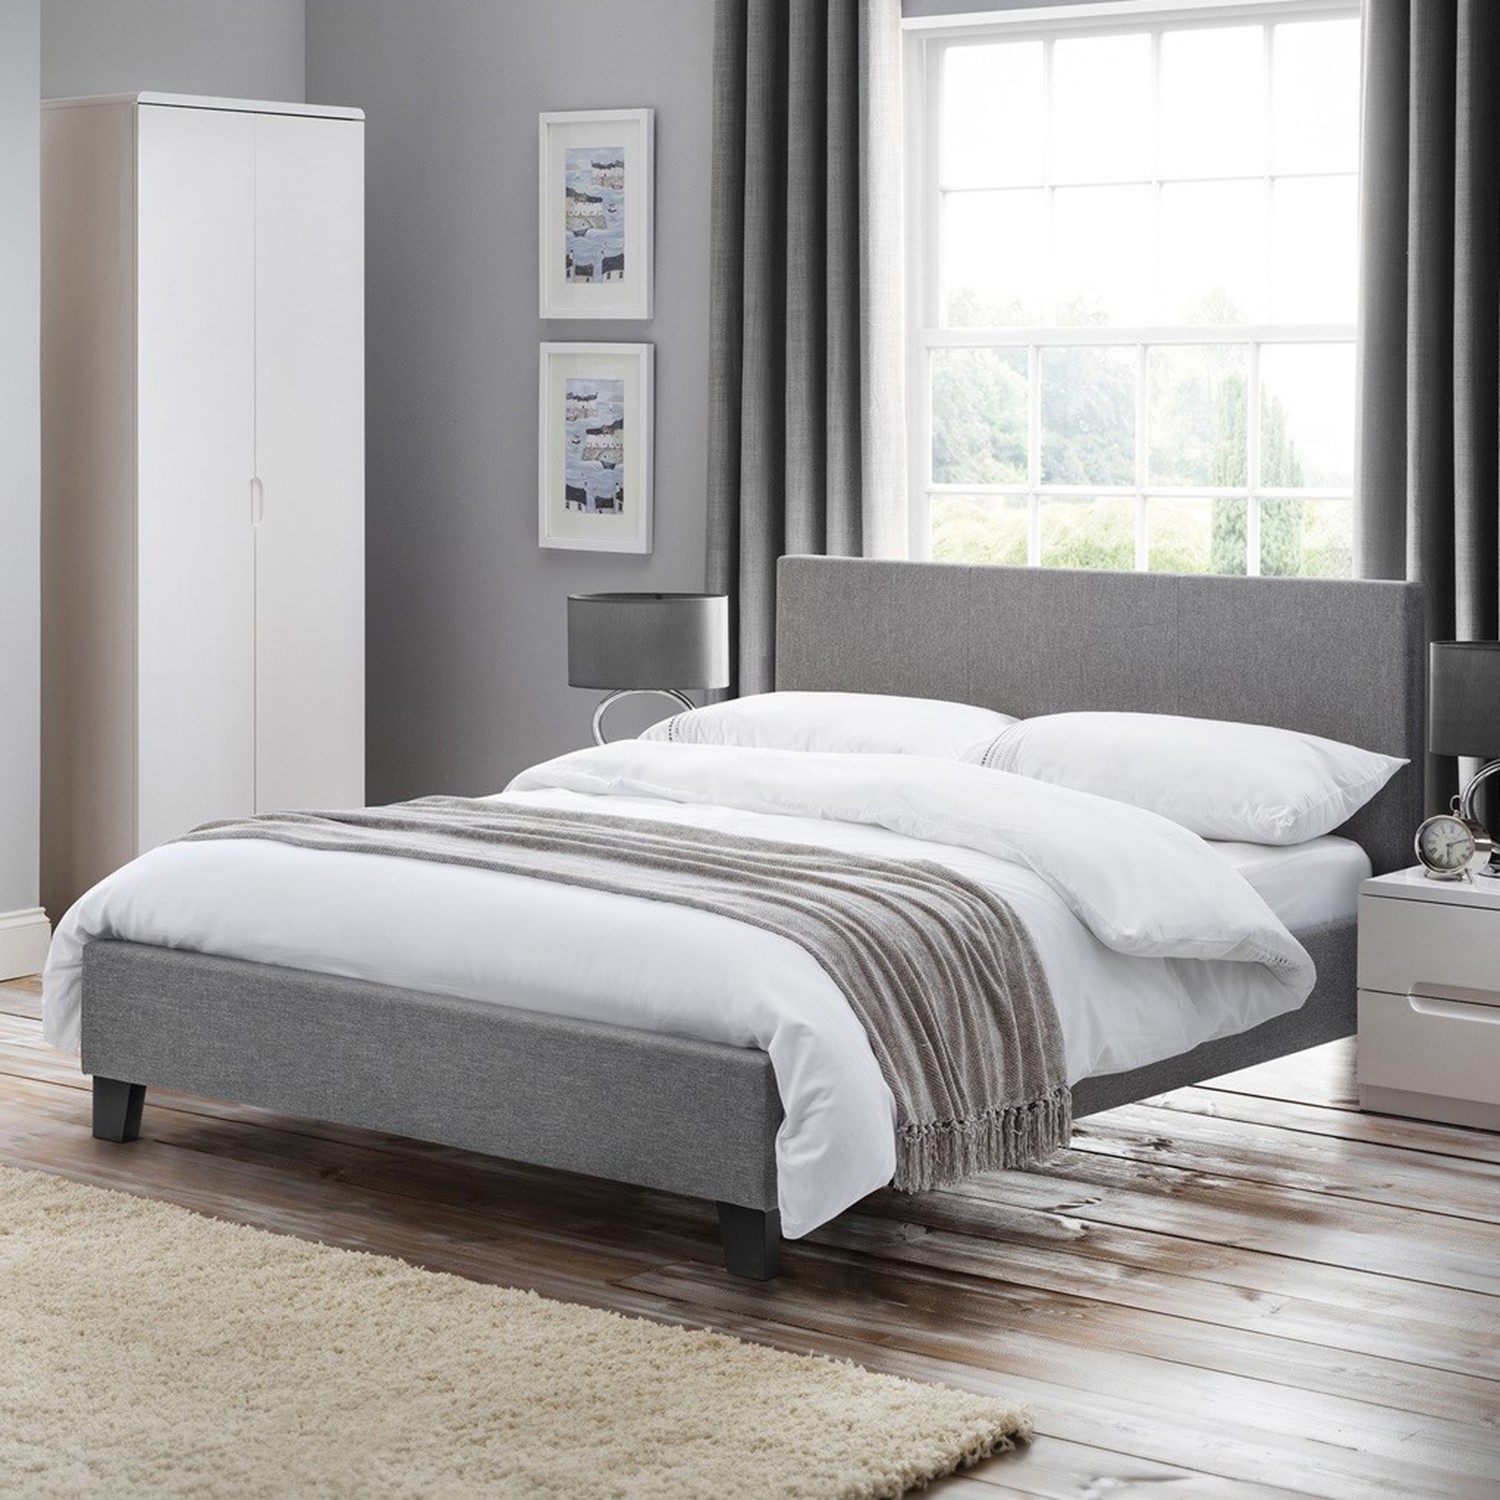 Read more about Grey linen double bed frame rialto julian bowen